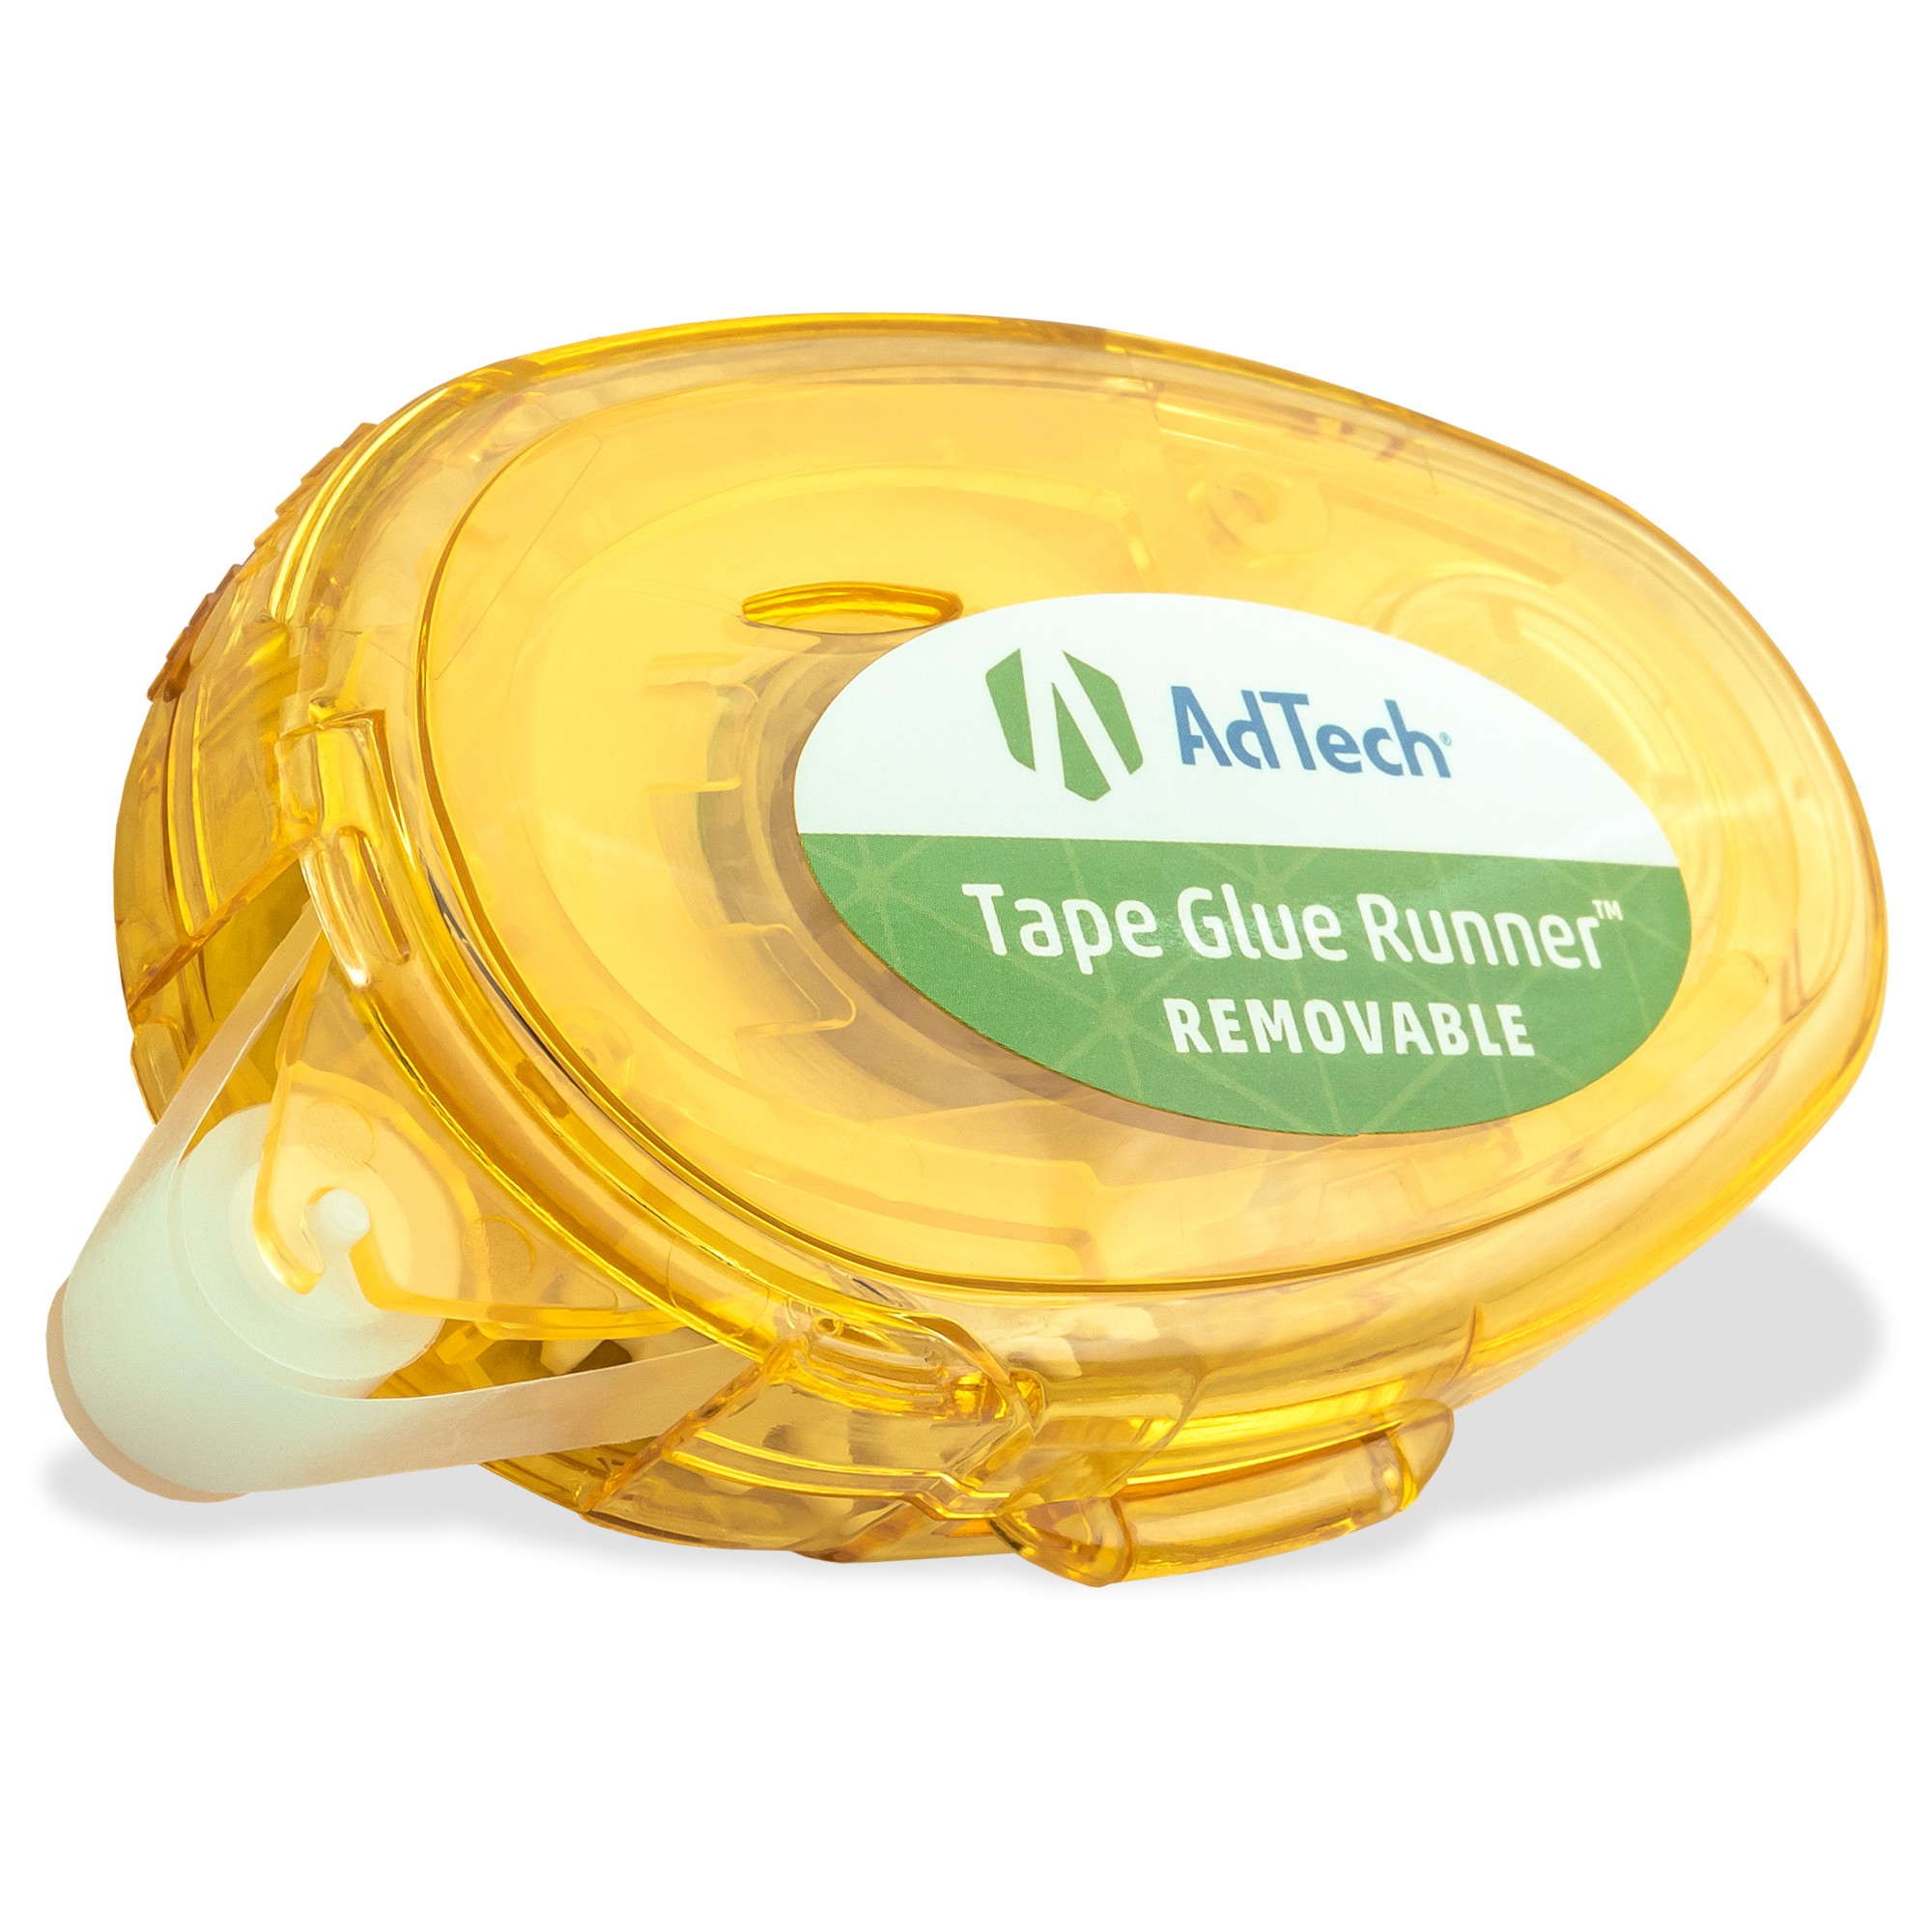 Adtech 05603 Glue Runner Permanent 35 Yards Total - Pack of 3 (4 Each)